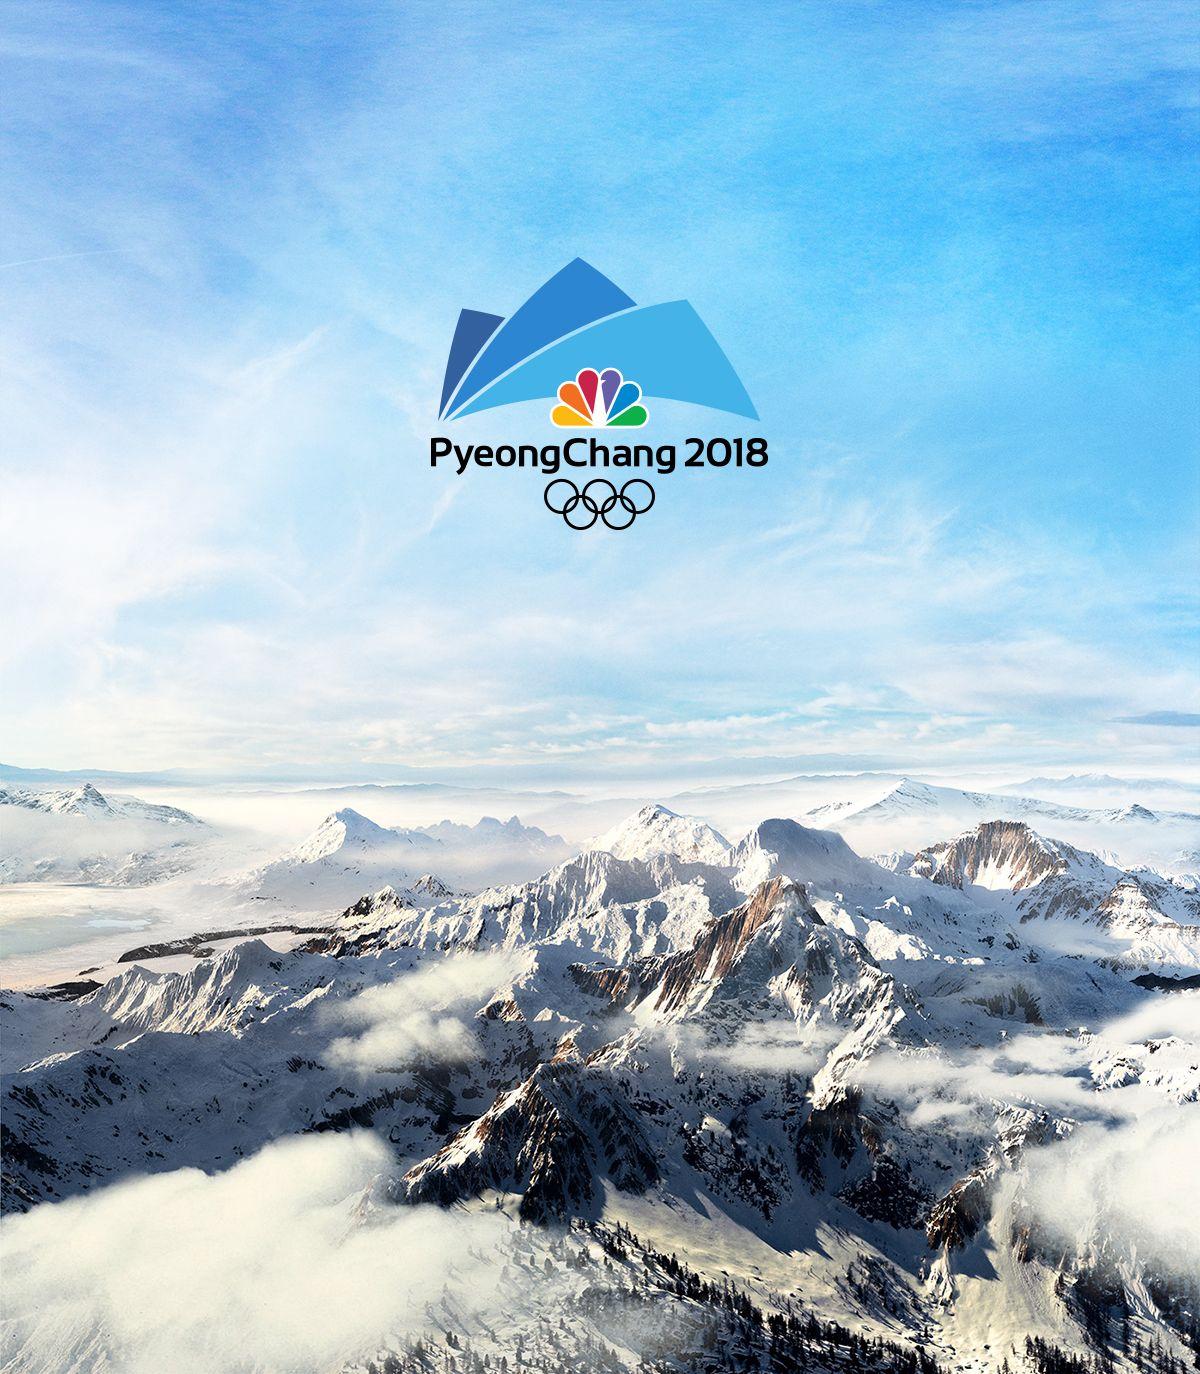 Nbc pyeongchang 2018 Olympics winter games logo